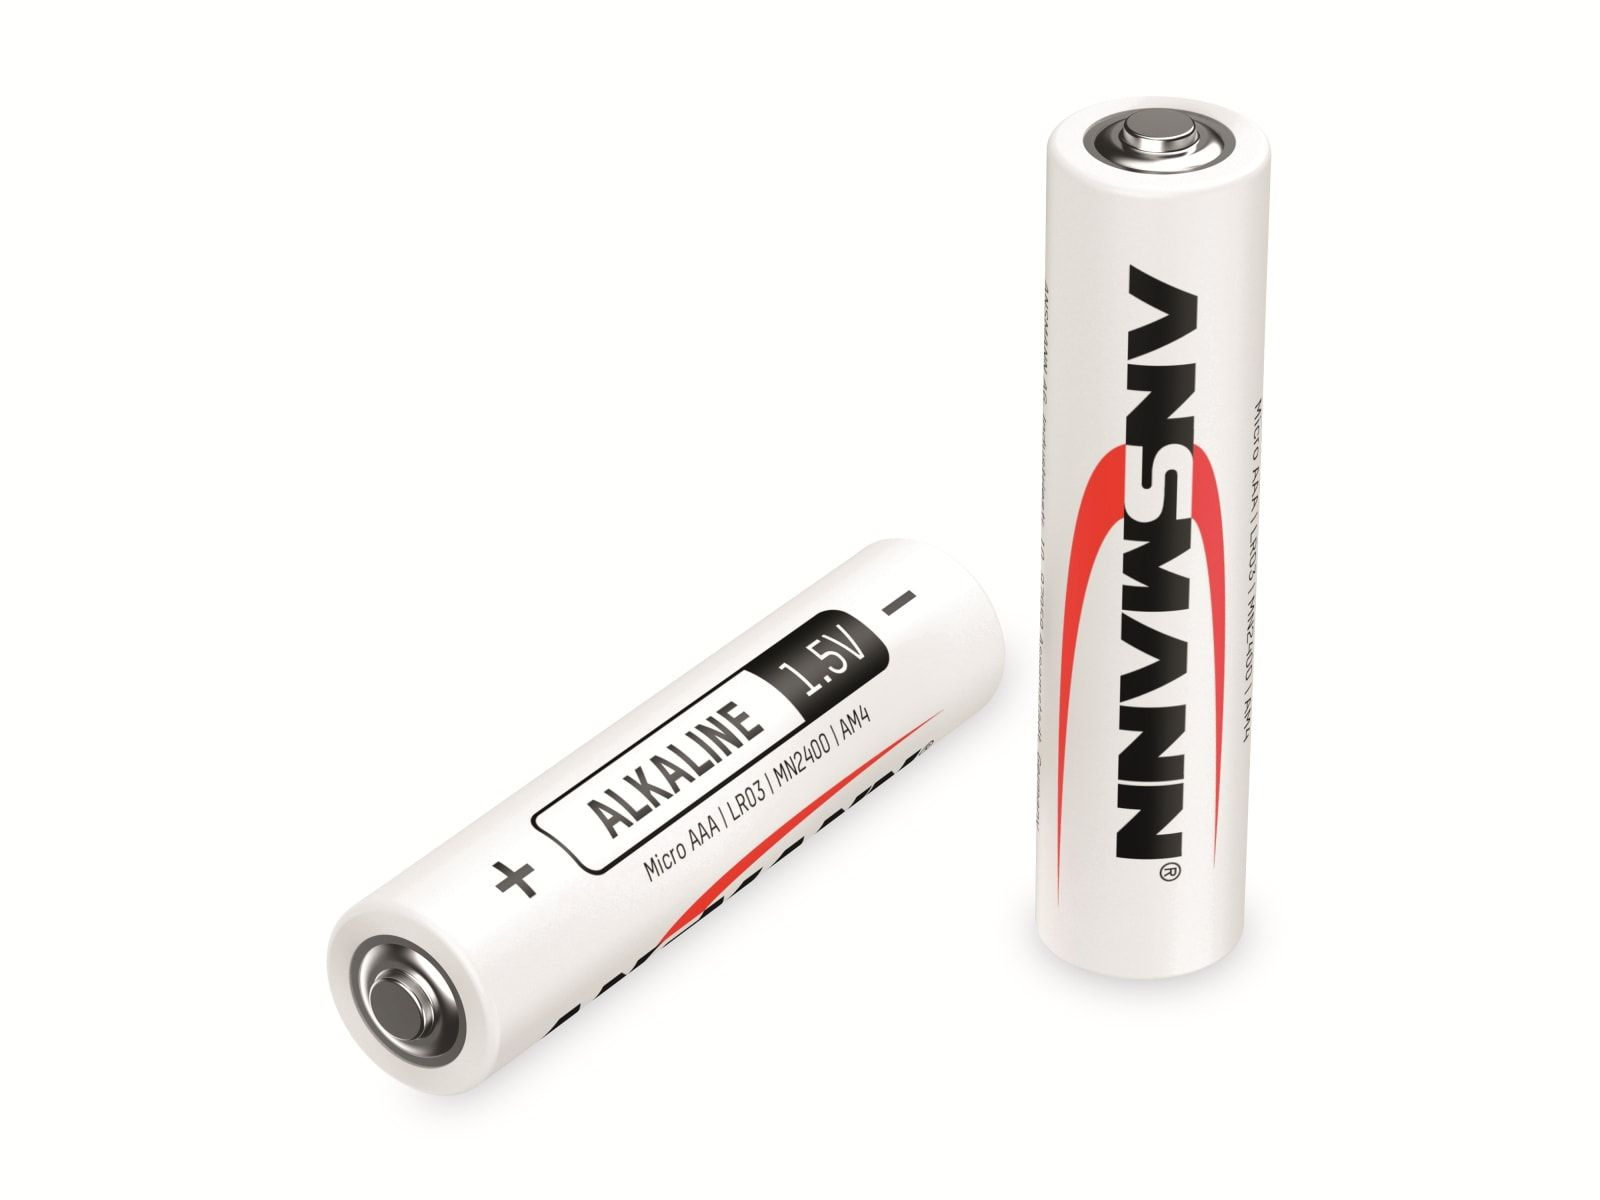 Micro-Batterie-Set, 42 Stück Alkaline ANSMANN Alkaline, Batterien